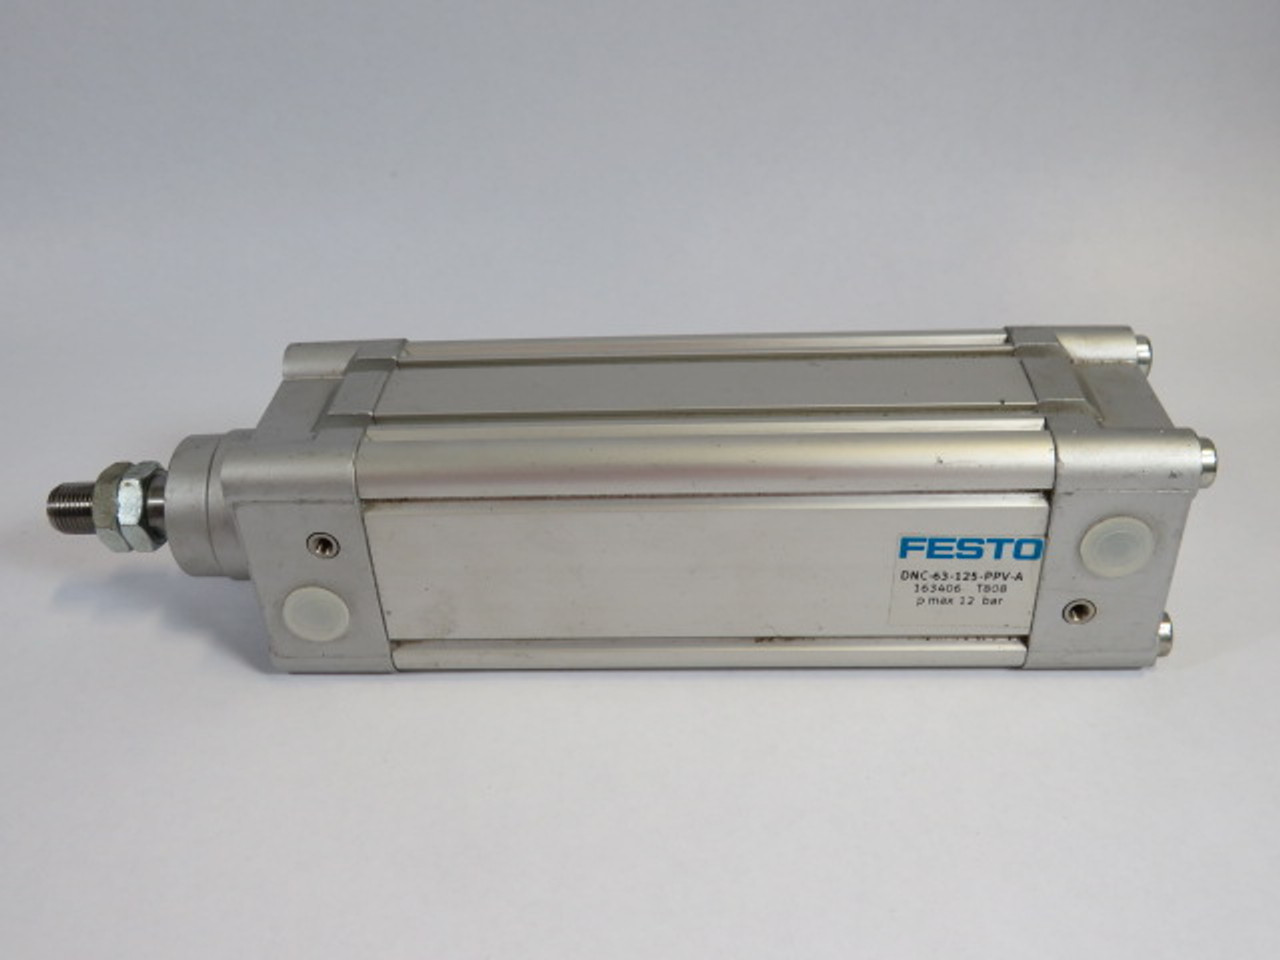 Festo DNC-63-125-PPV-A Standard Cylinder 63MM Bore 125MM Stroke 12BAR USED